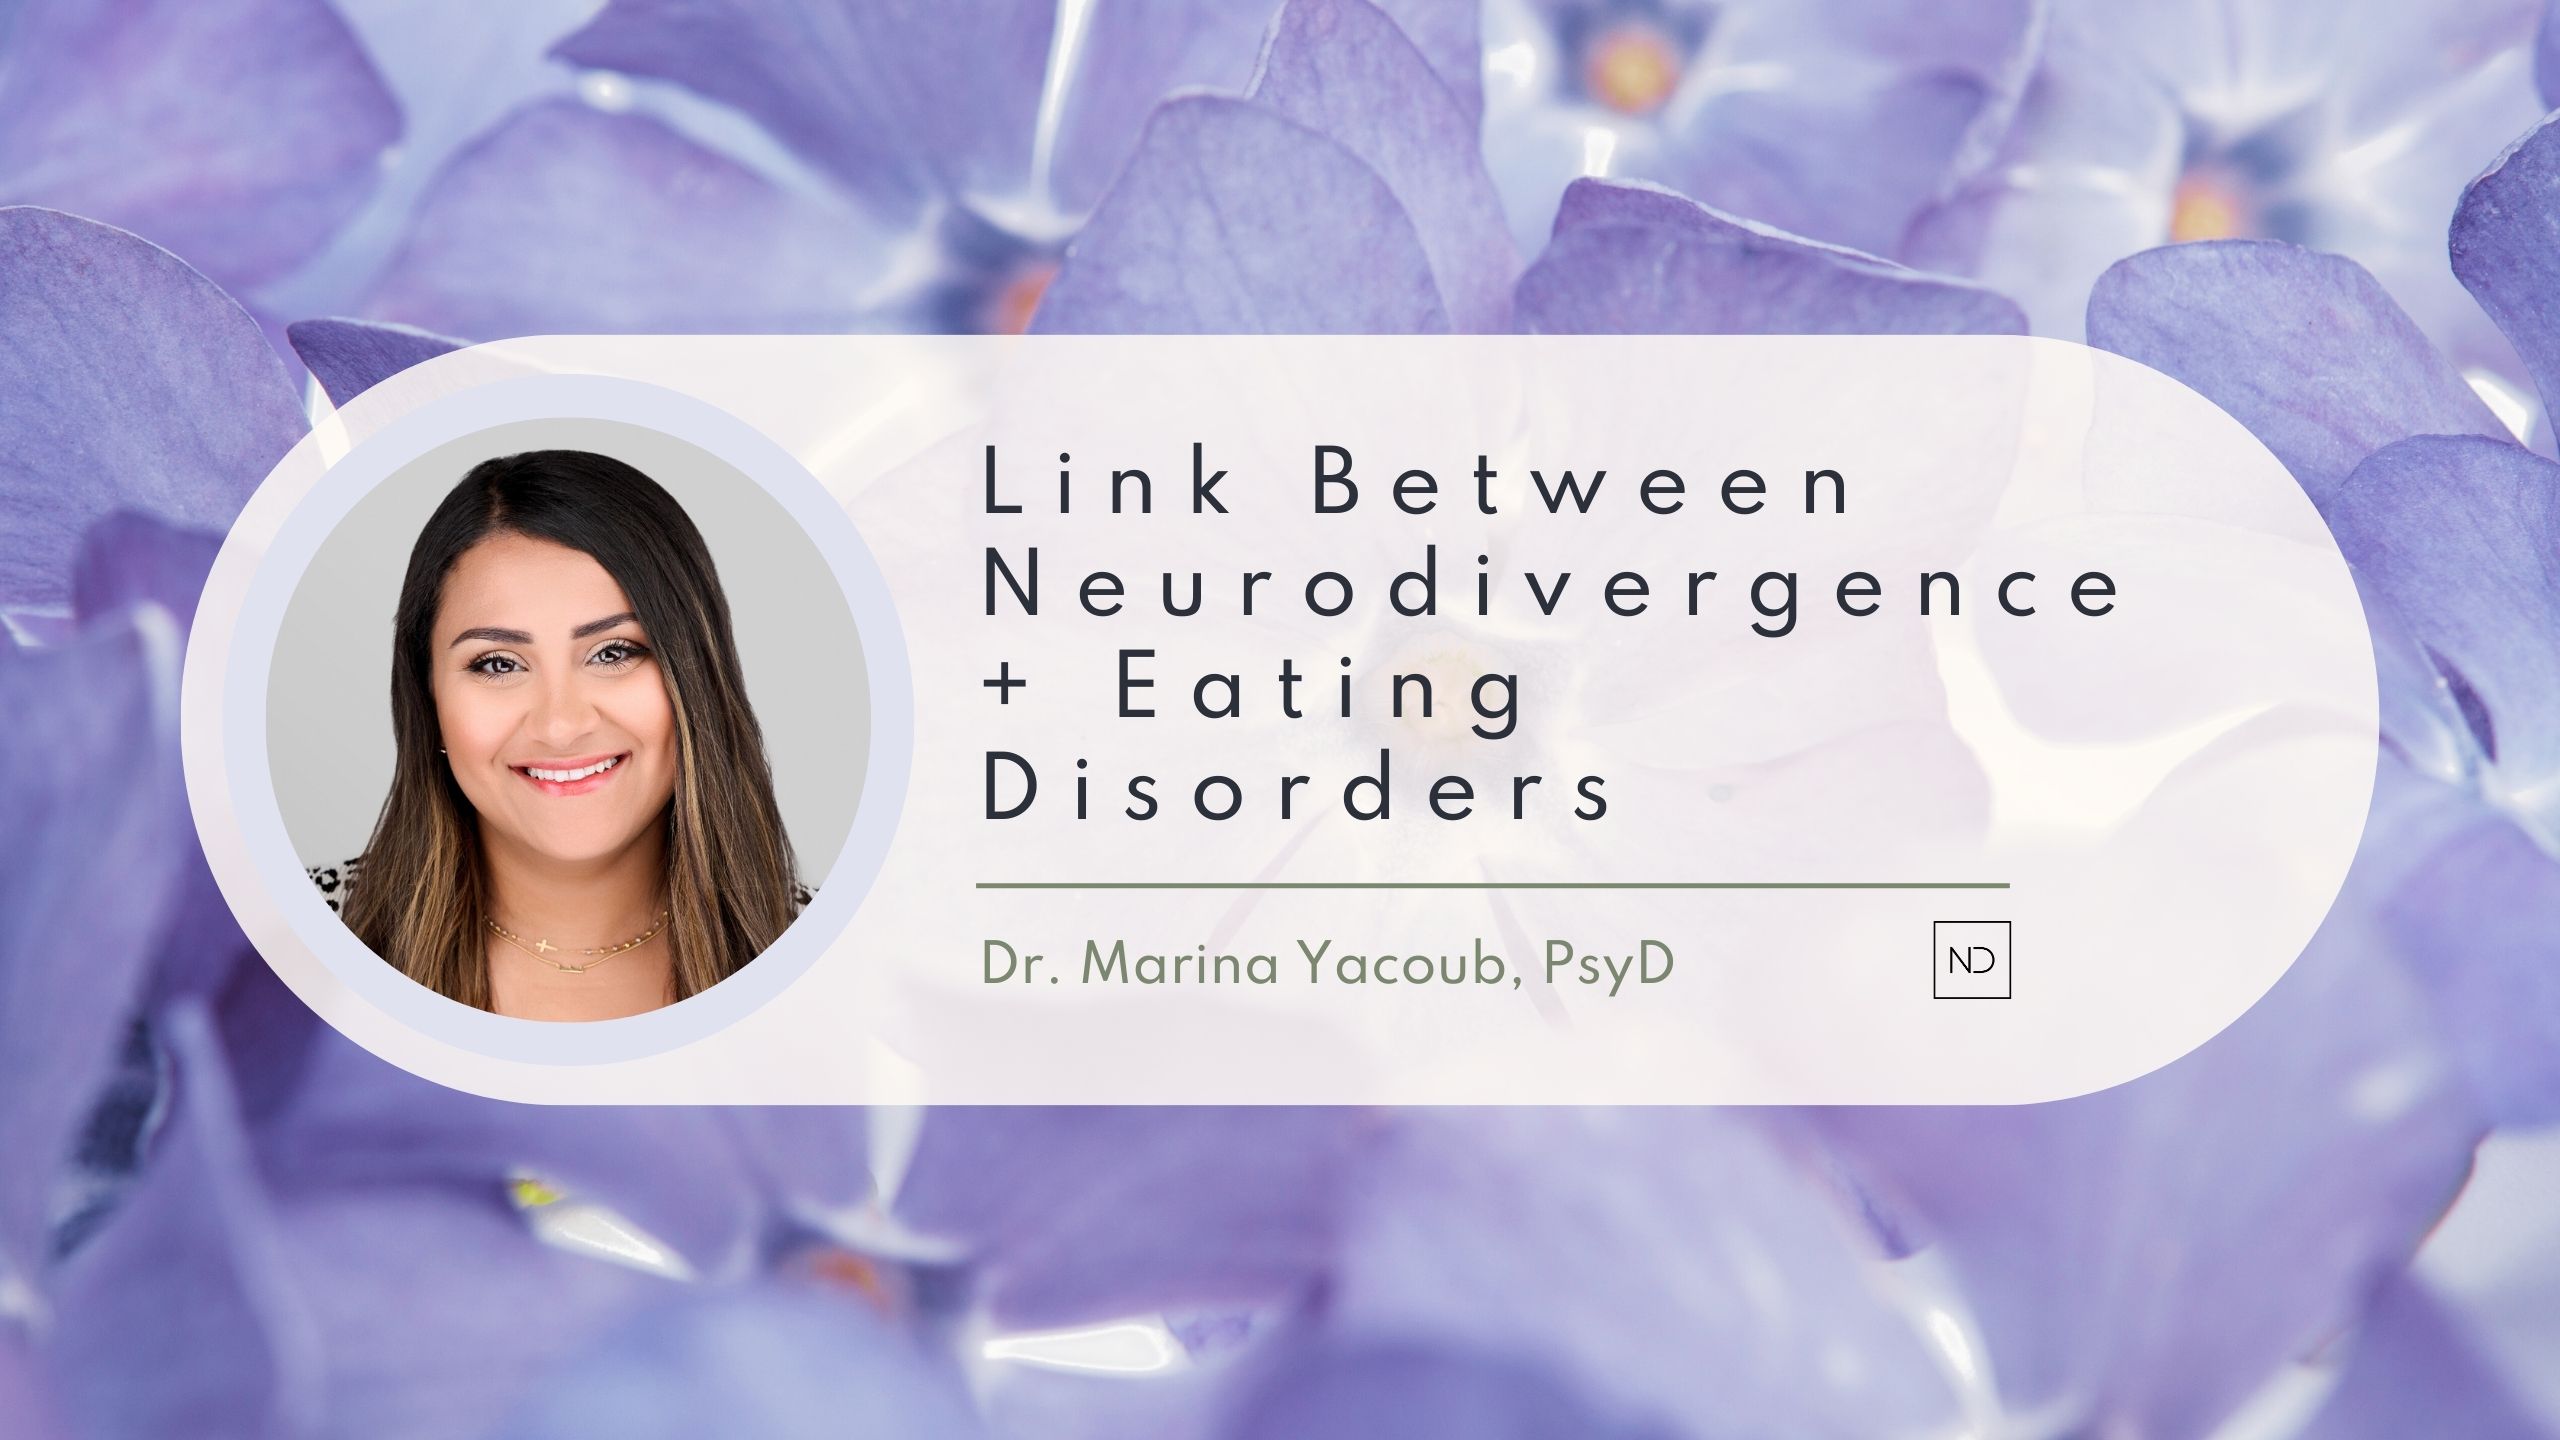 Link Between Neurodivergence + Eating Disorders